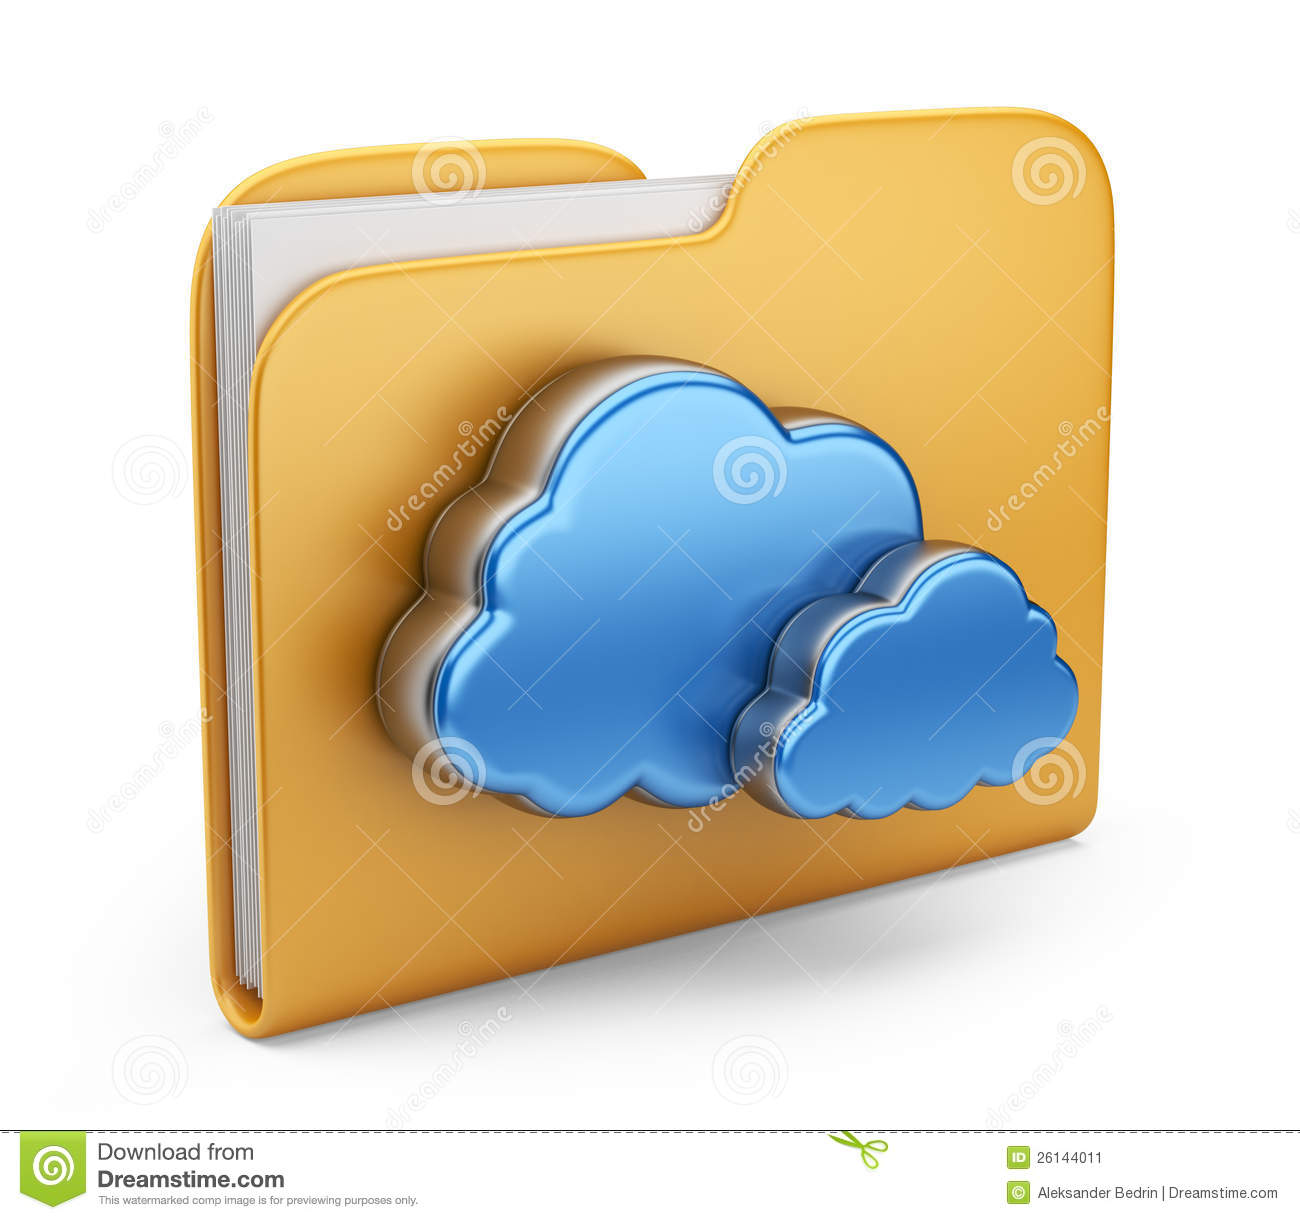 Cloud Folder Icon